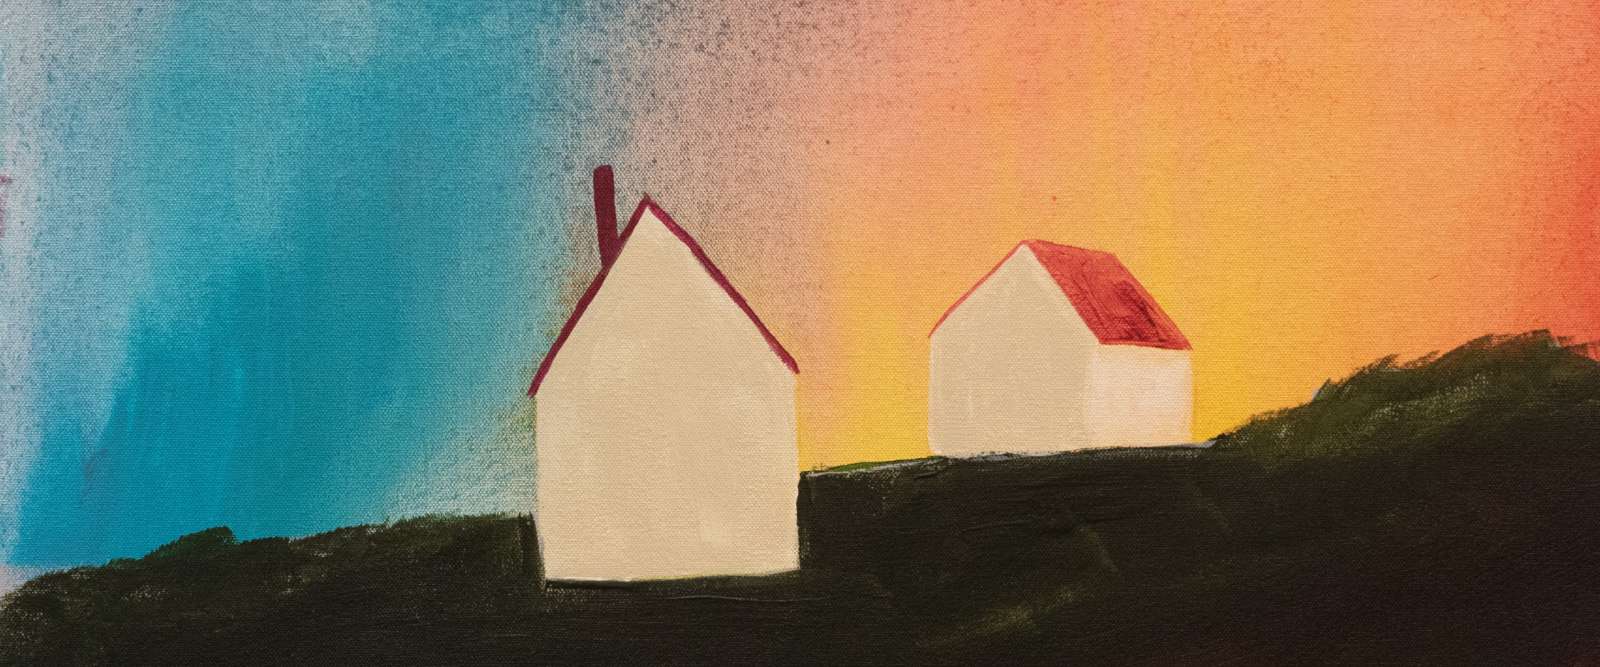 Painting of houses by Frankie Brackley-Tolman